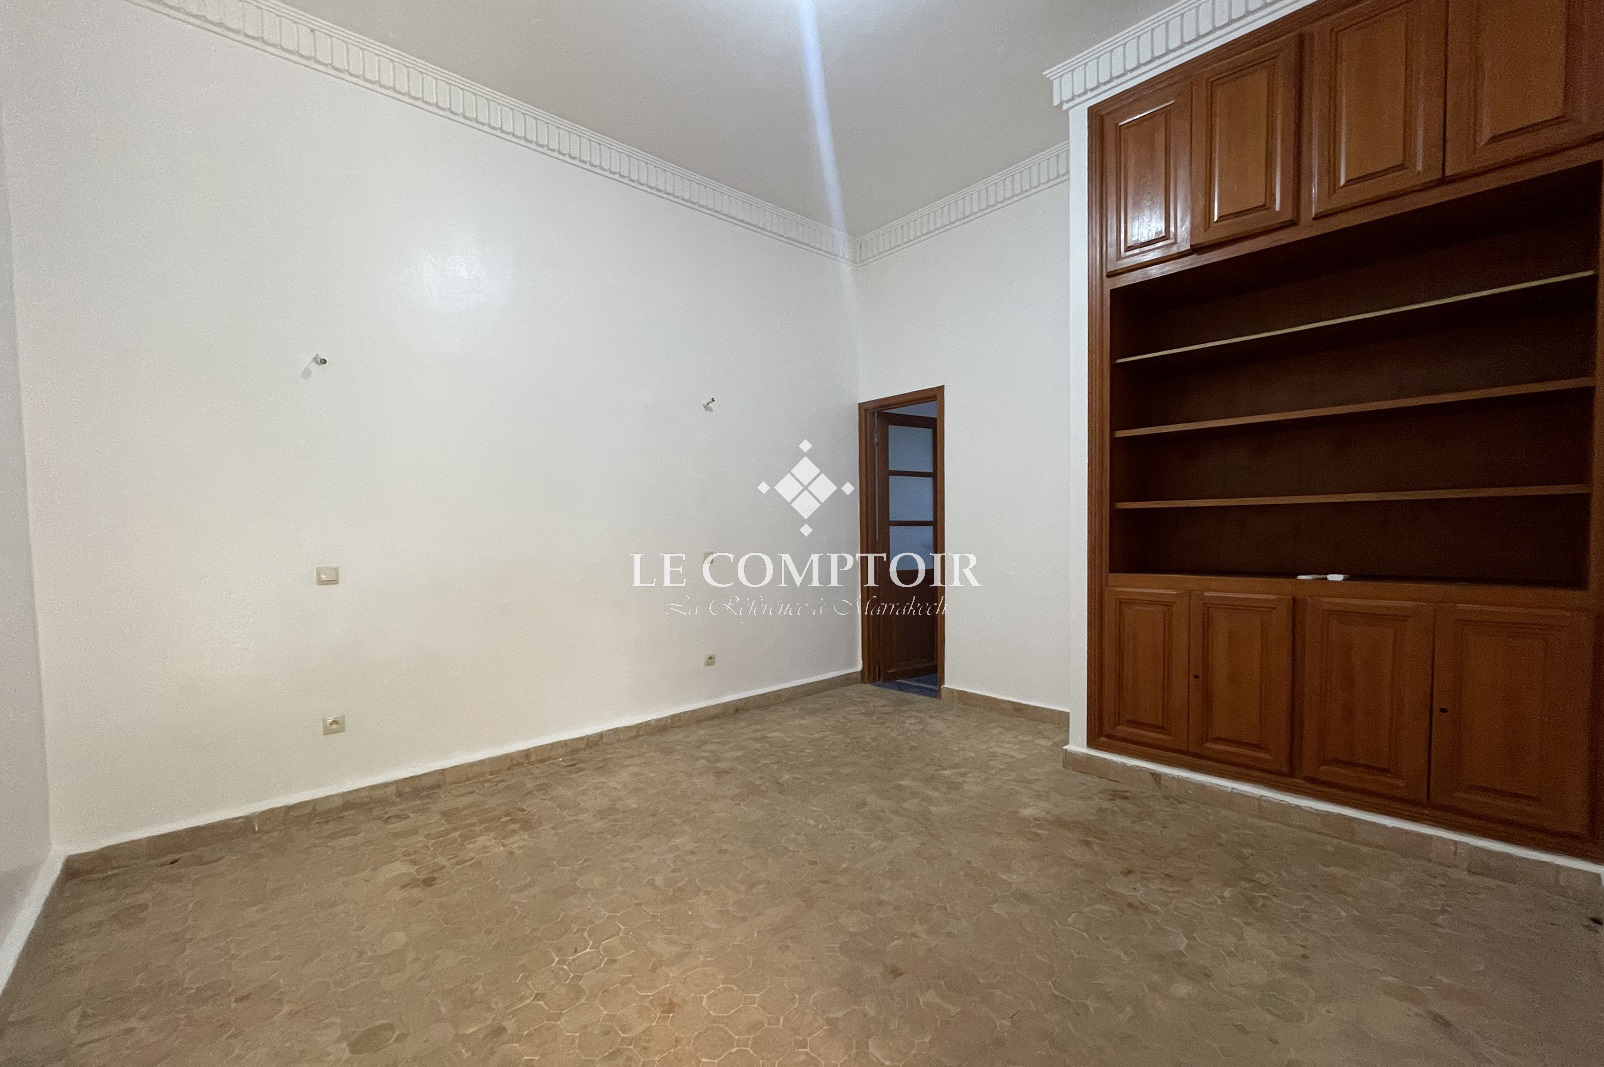 Le Comptoir Immobilier Agence Immobiliere Marrakech Villa Residence Non Meublee Location Marakech Maroc Piscine 7 2